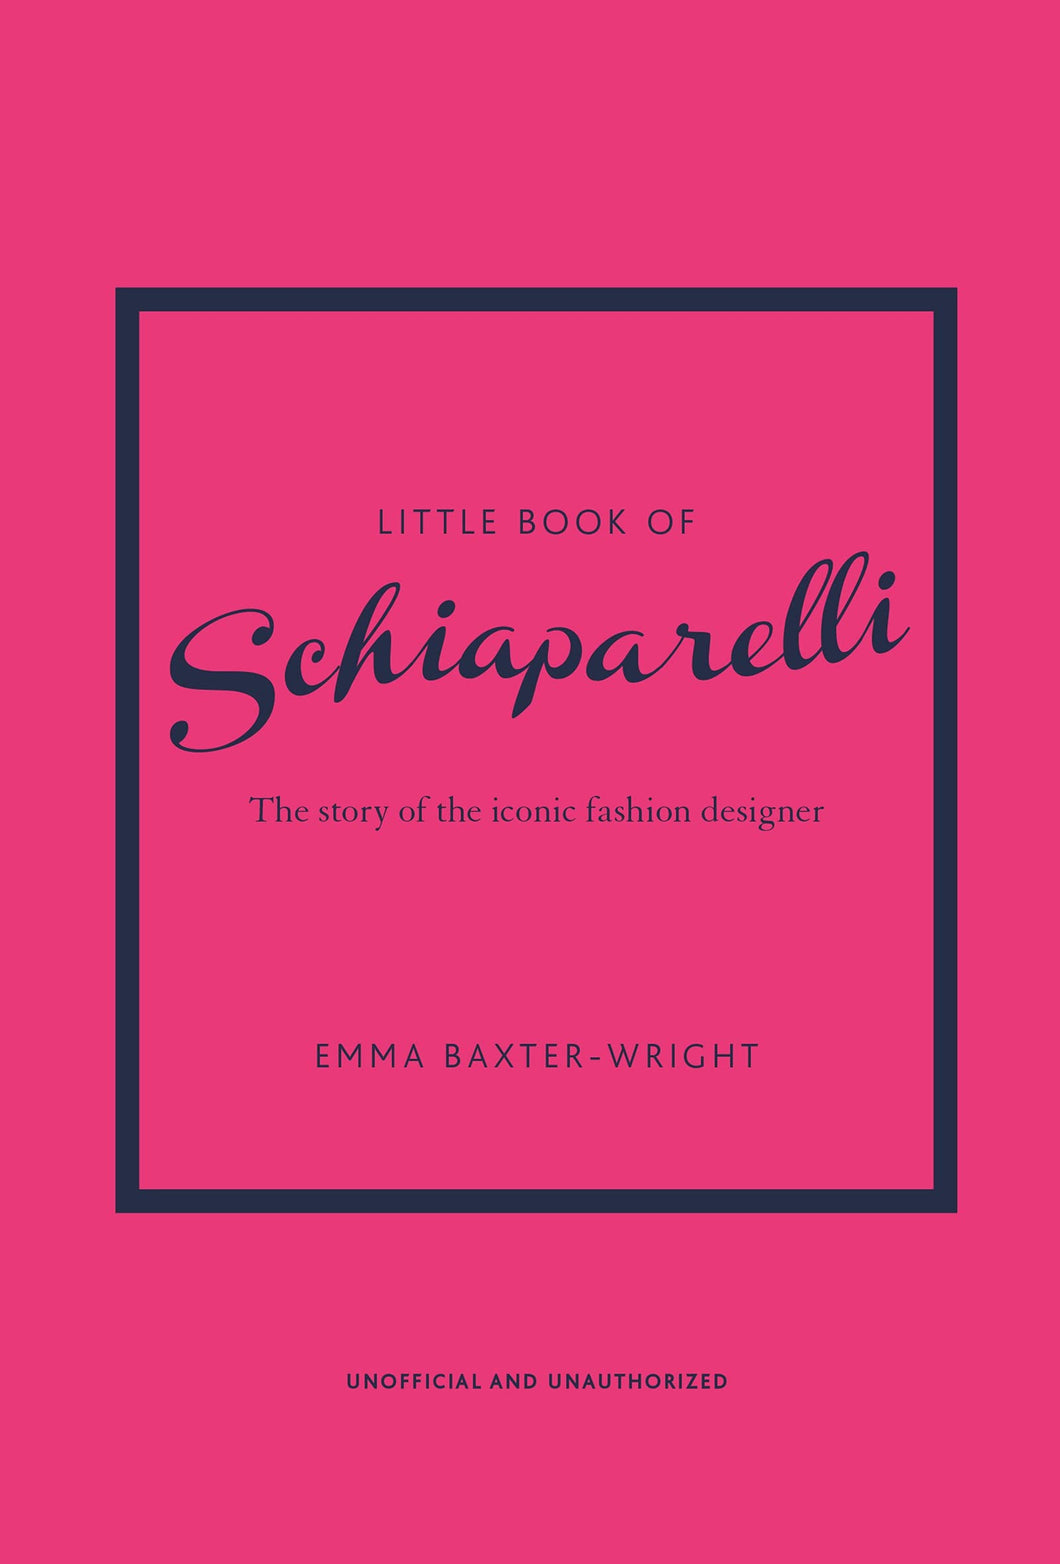 Little Books of Fashion 2: Schiaparelli